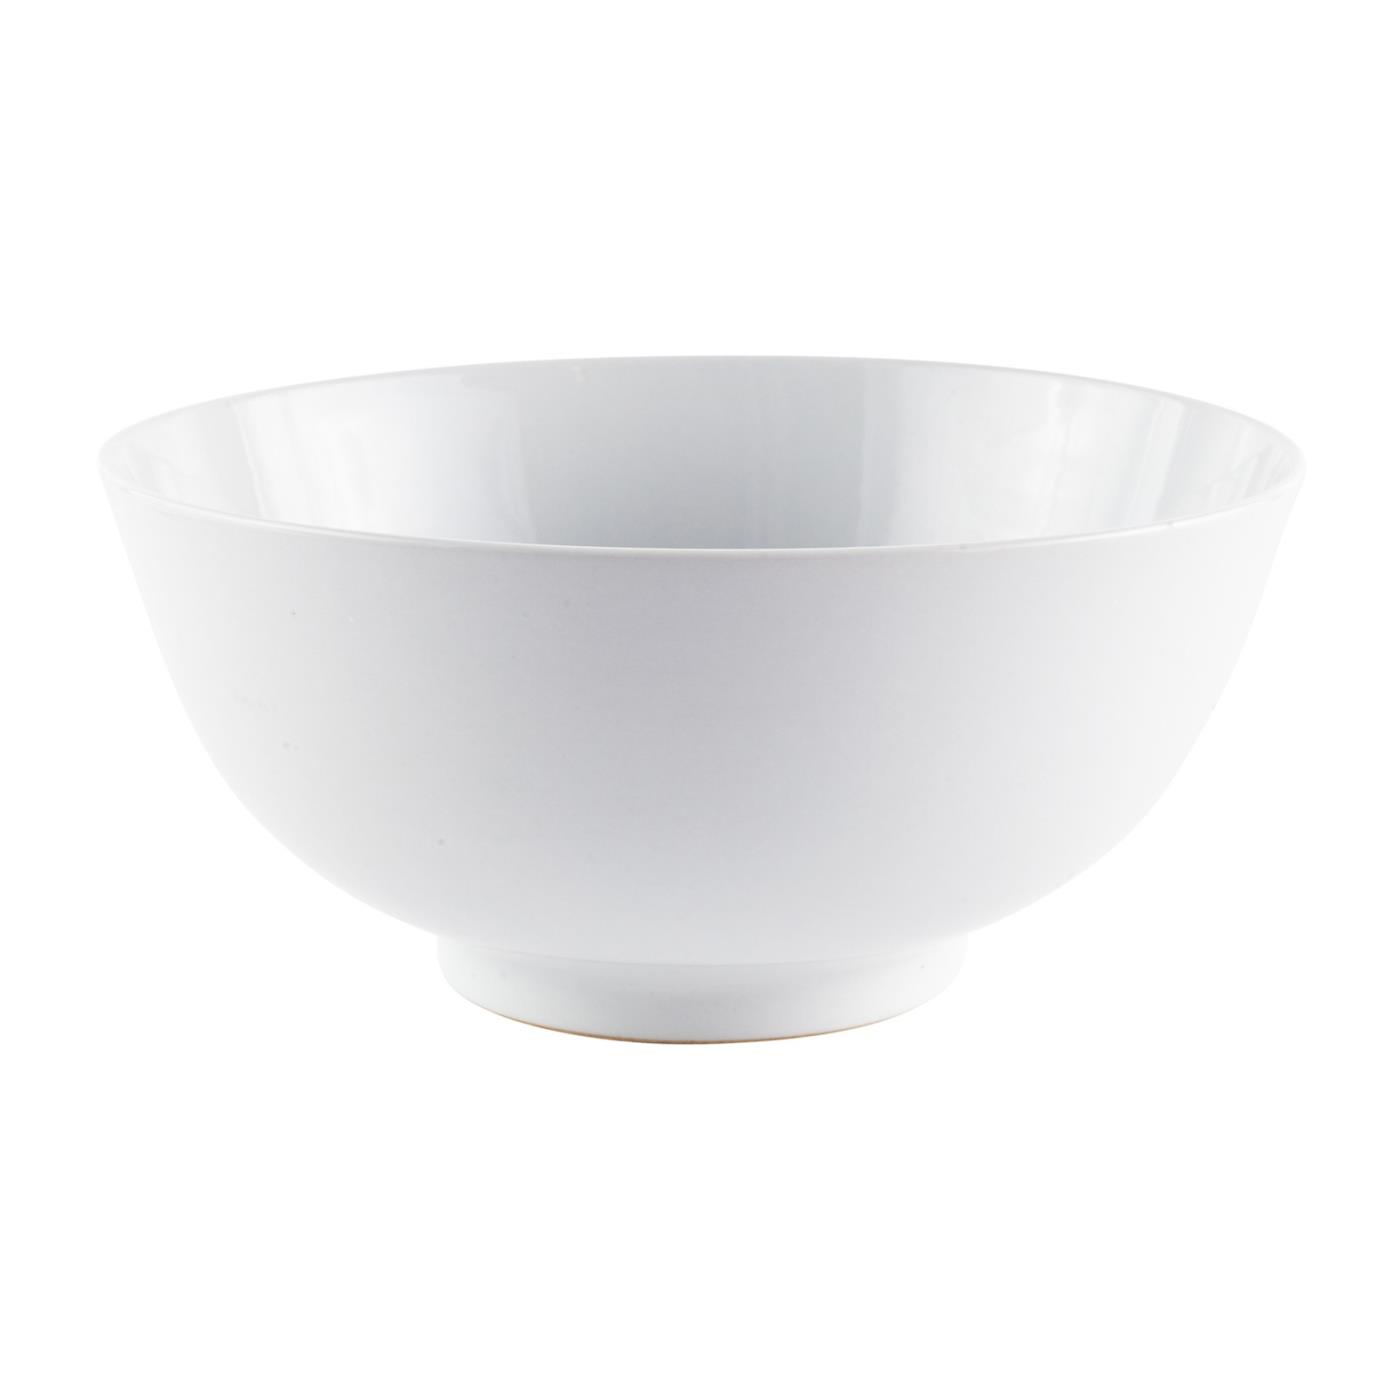 White Ceramic Round Bowl - 12"